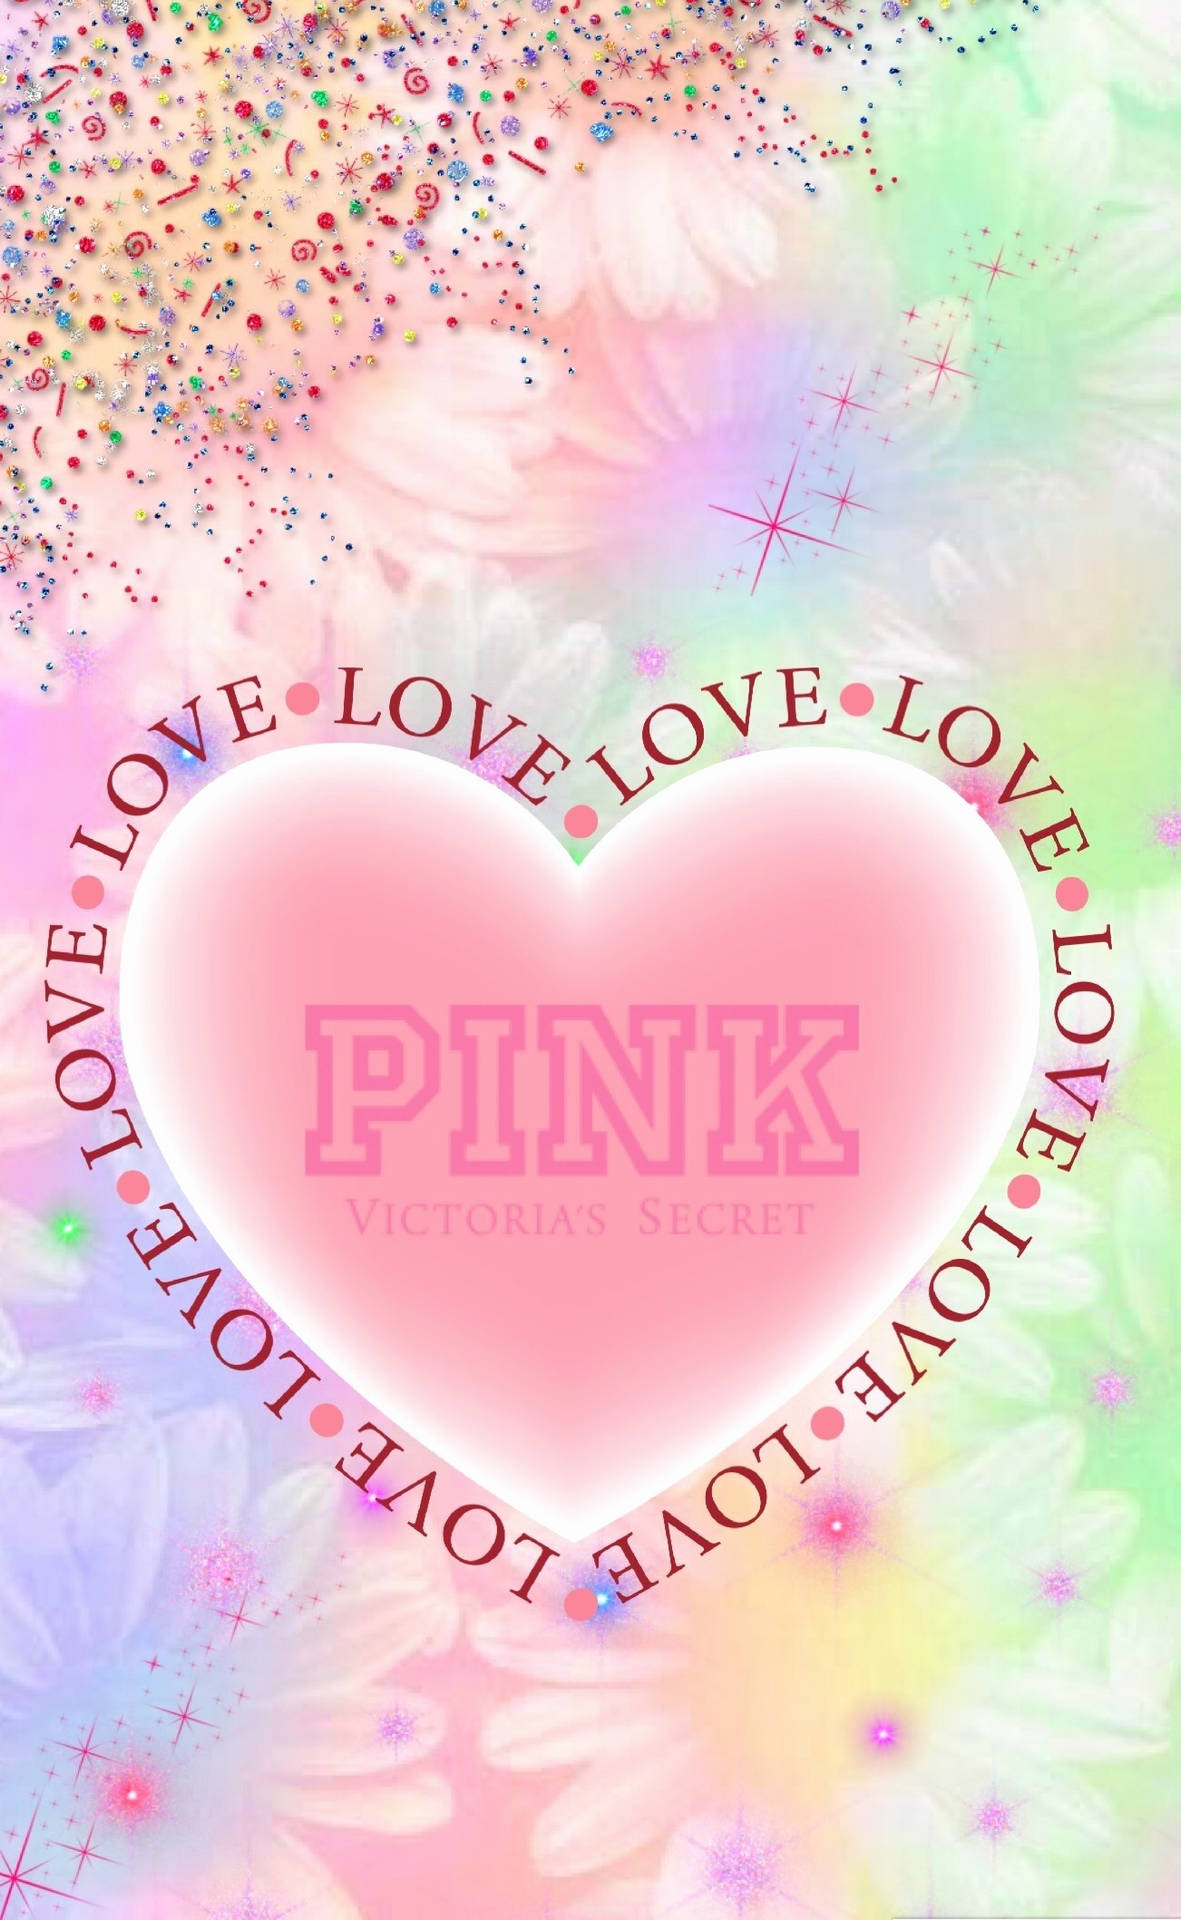 Download Victoria's Secret Heart Pink